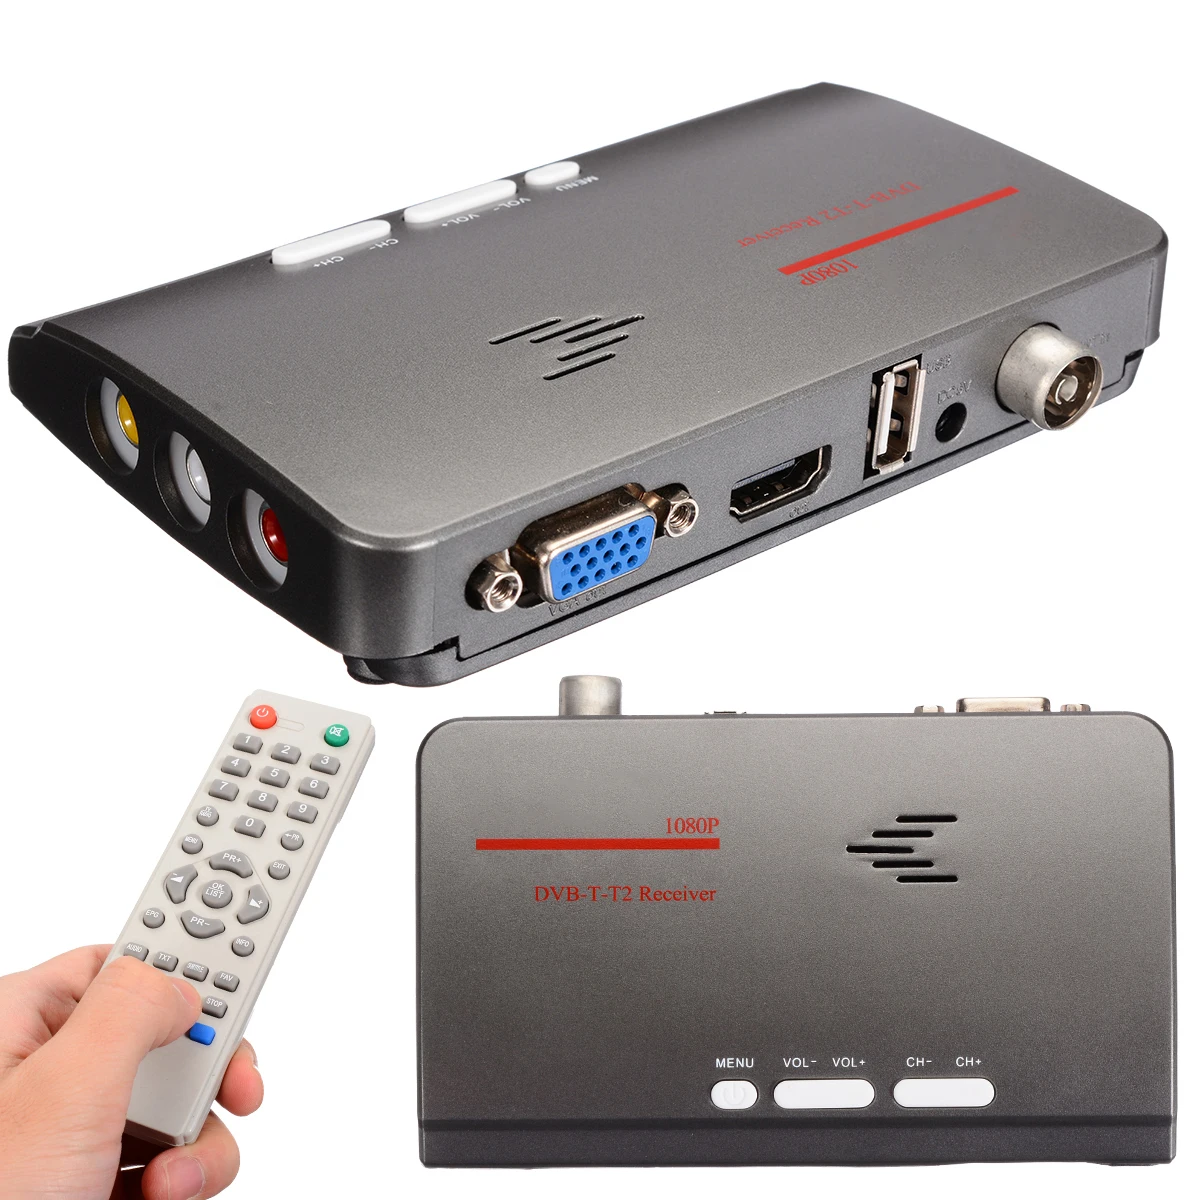 

DVB-T DVB-T2 TV Tuner Receiver T/T2 TV Box VGA AV CVBS 1080P HDMI Digital HD Satellite Receiver for LCD/CRT Monitor